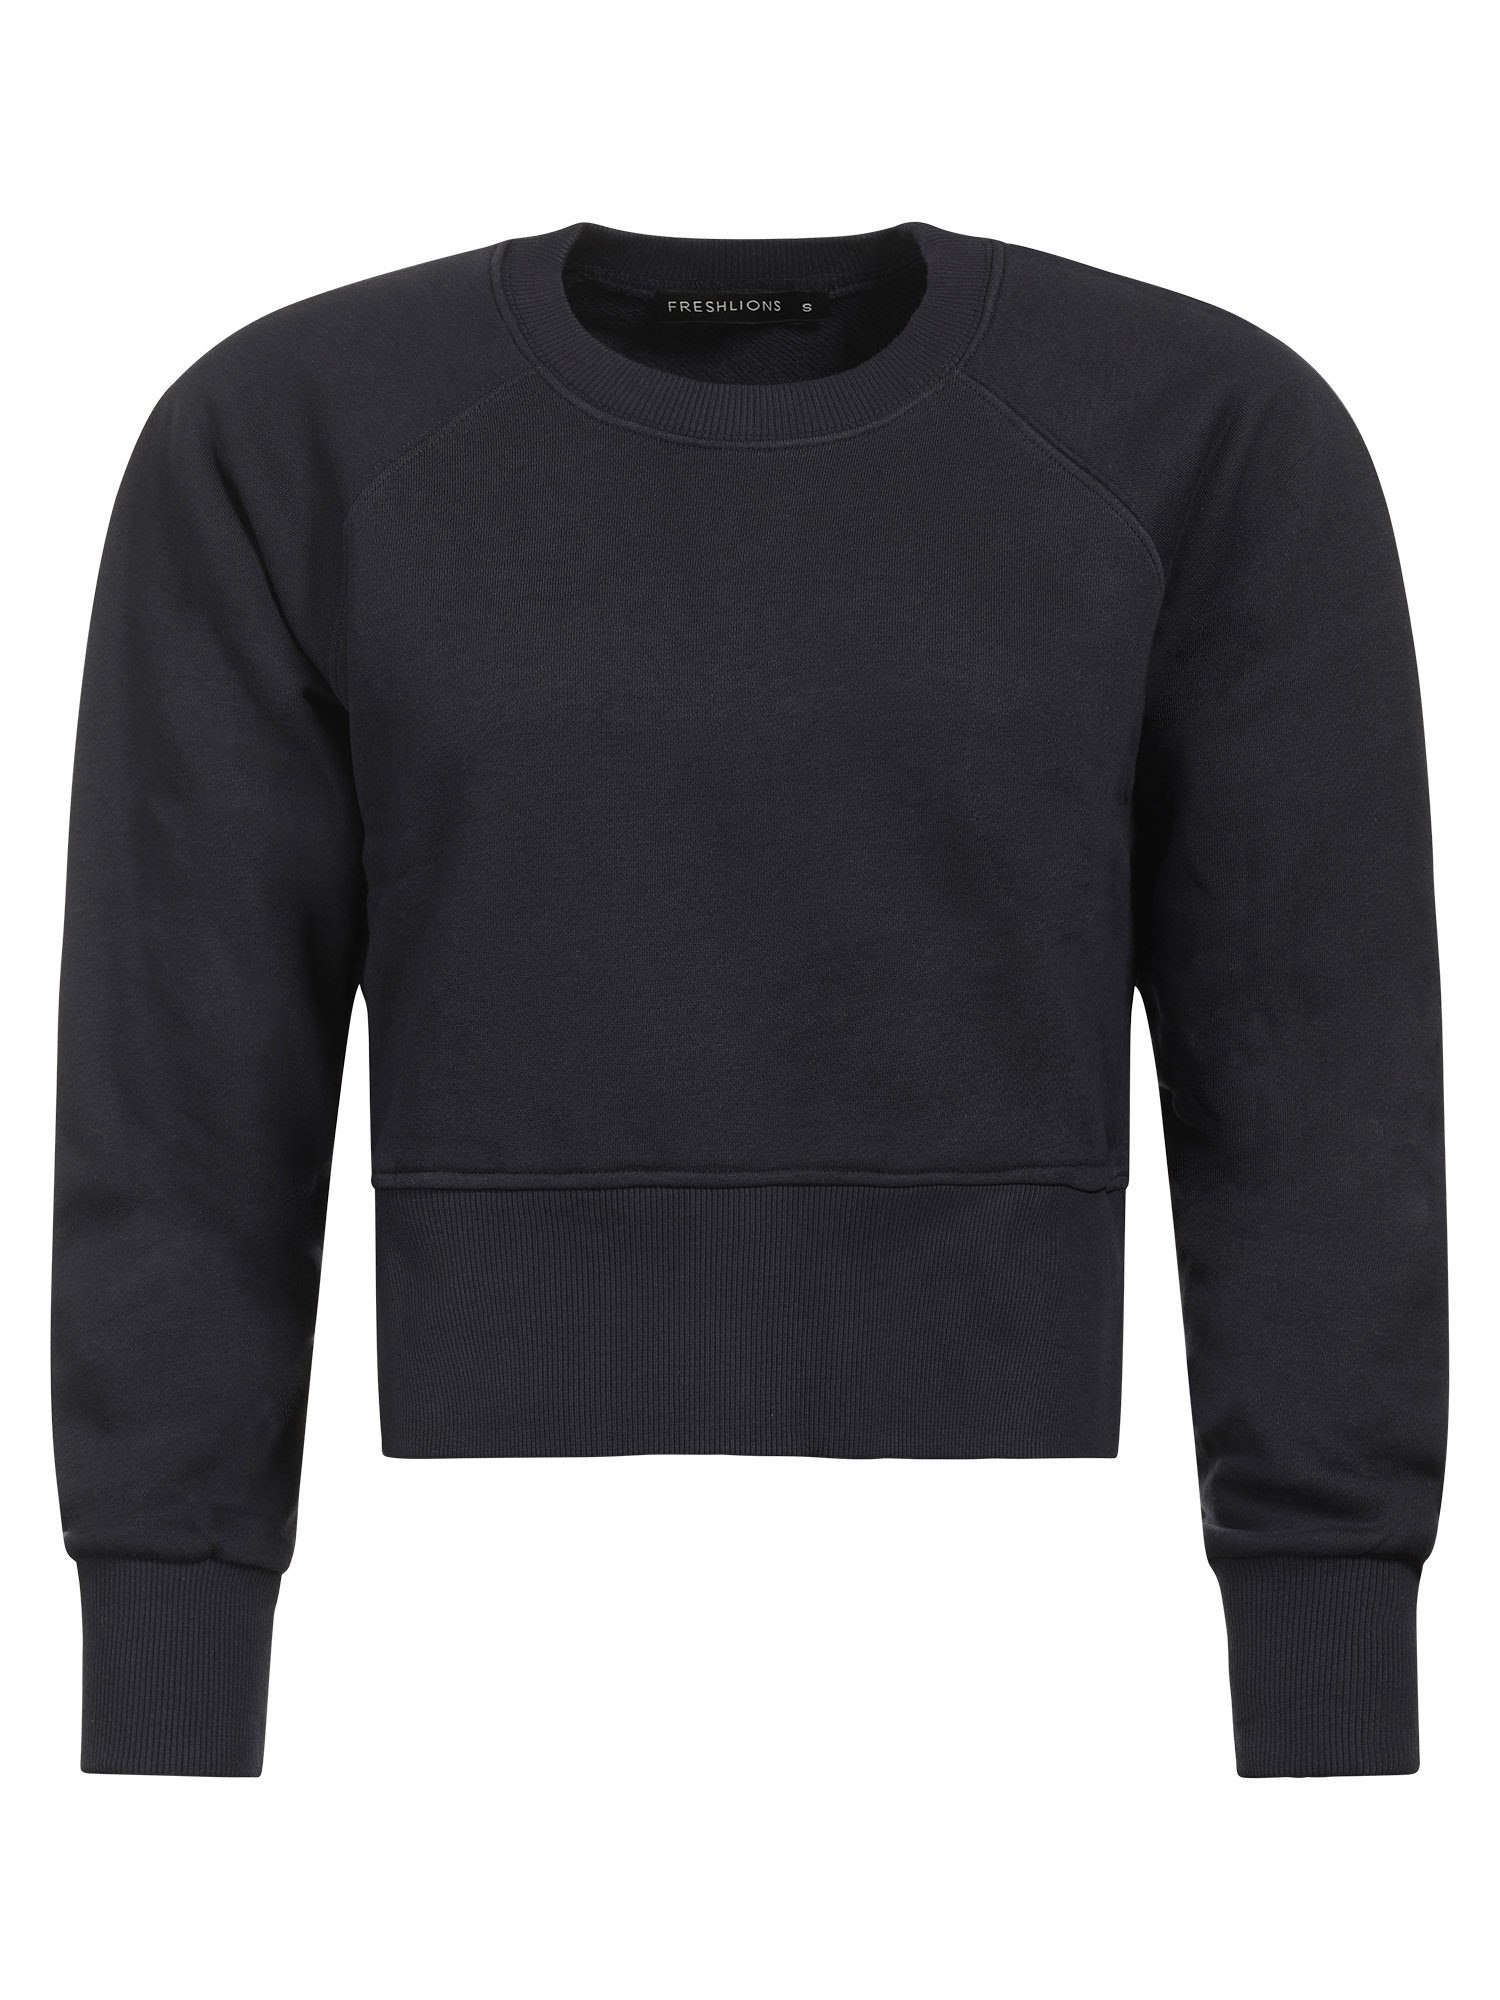 Freshlions Freshlions Sweatshirt Sweater Dunkelblau